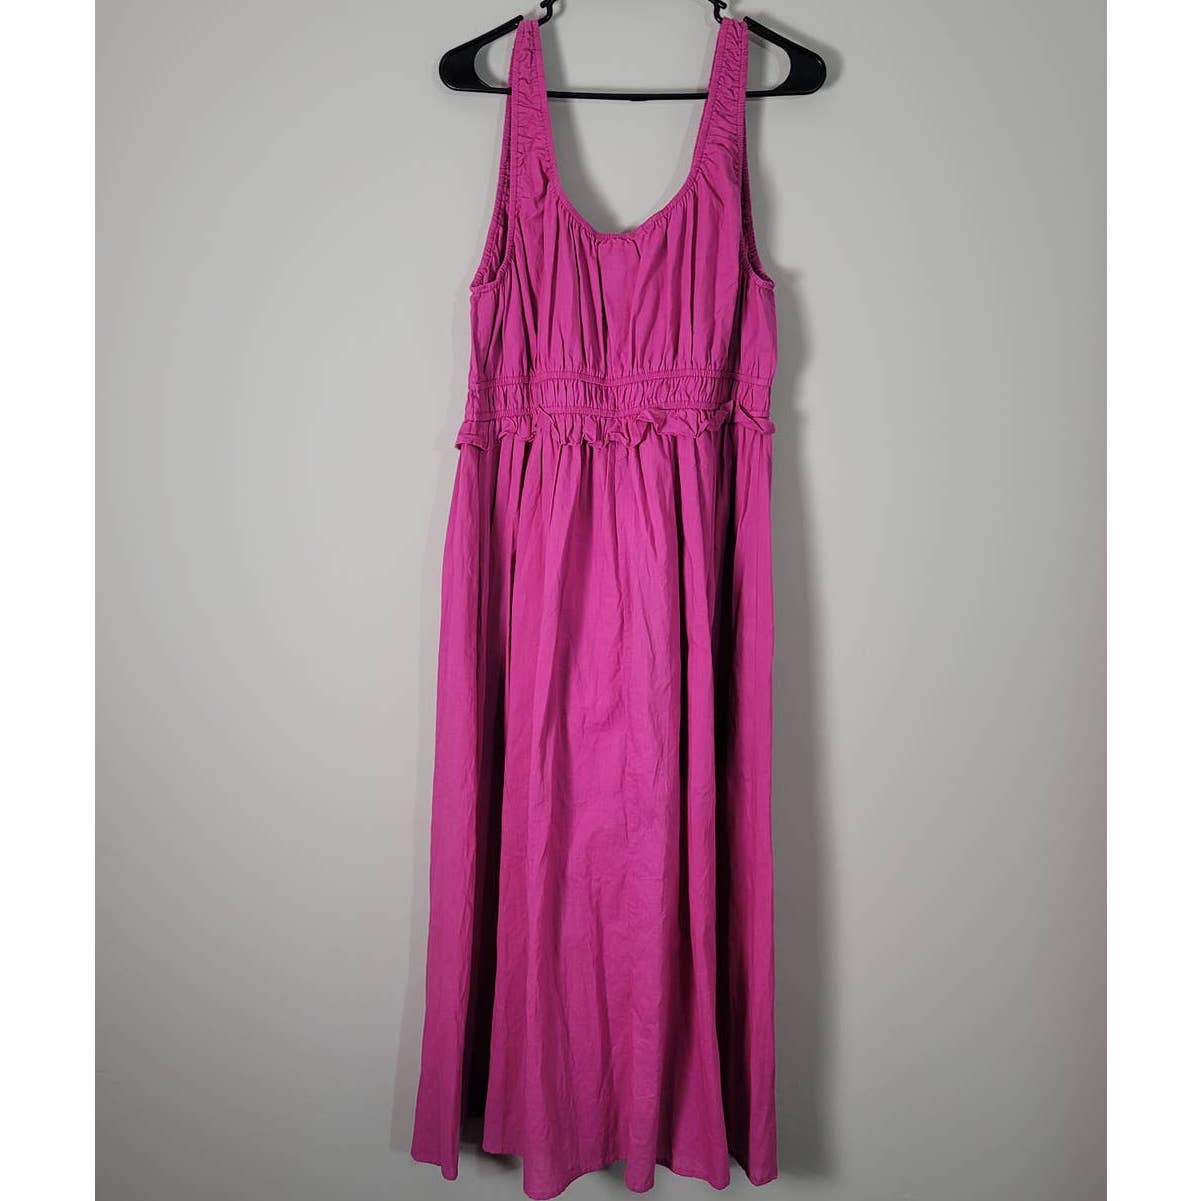 Arula Midi Dress Dark Pink Sleeveless A-Line Plus Size A (1X 14-16)